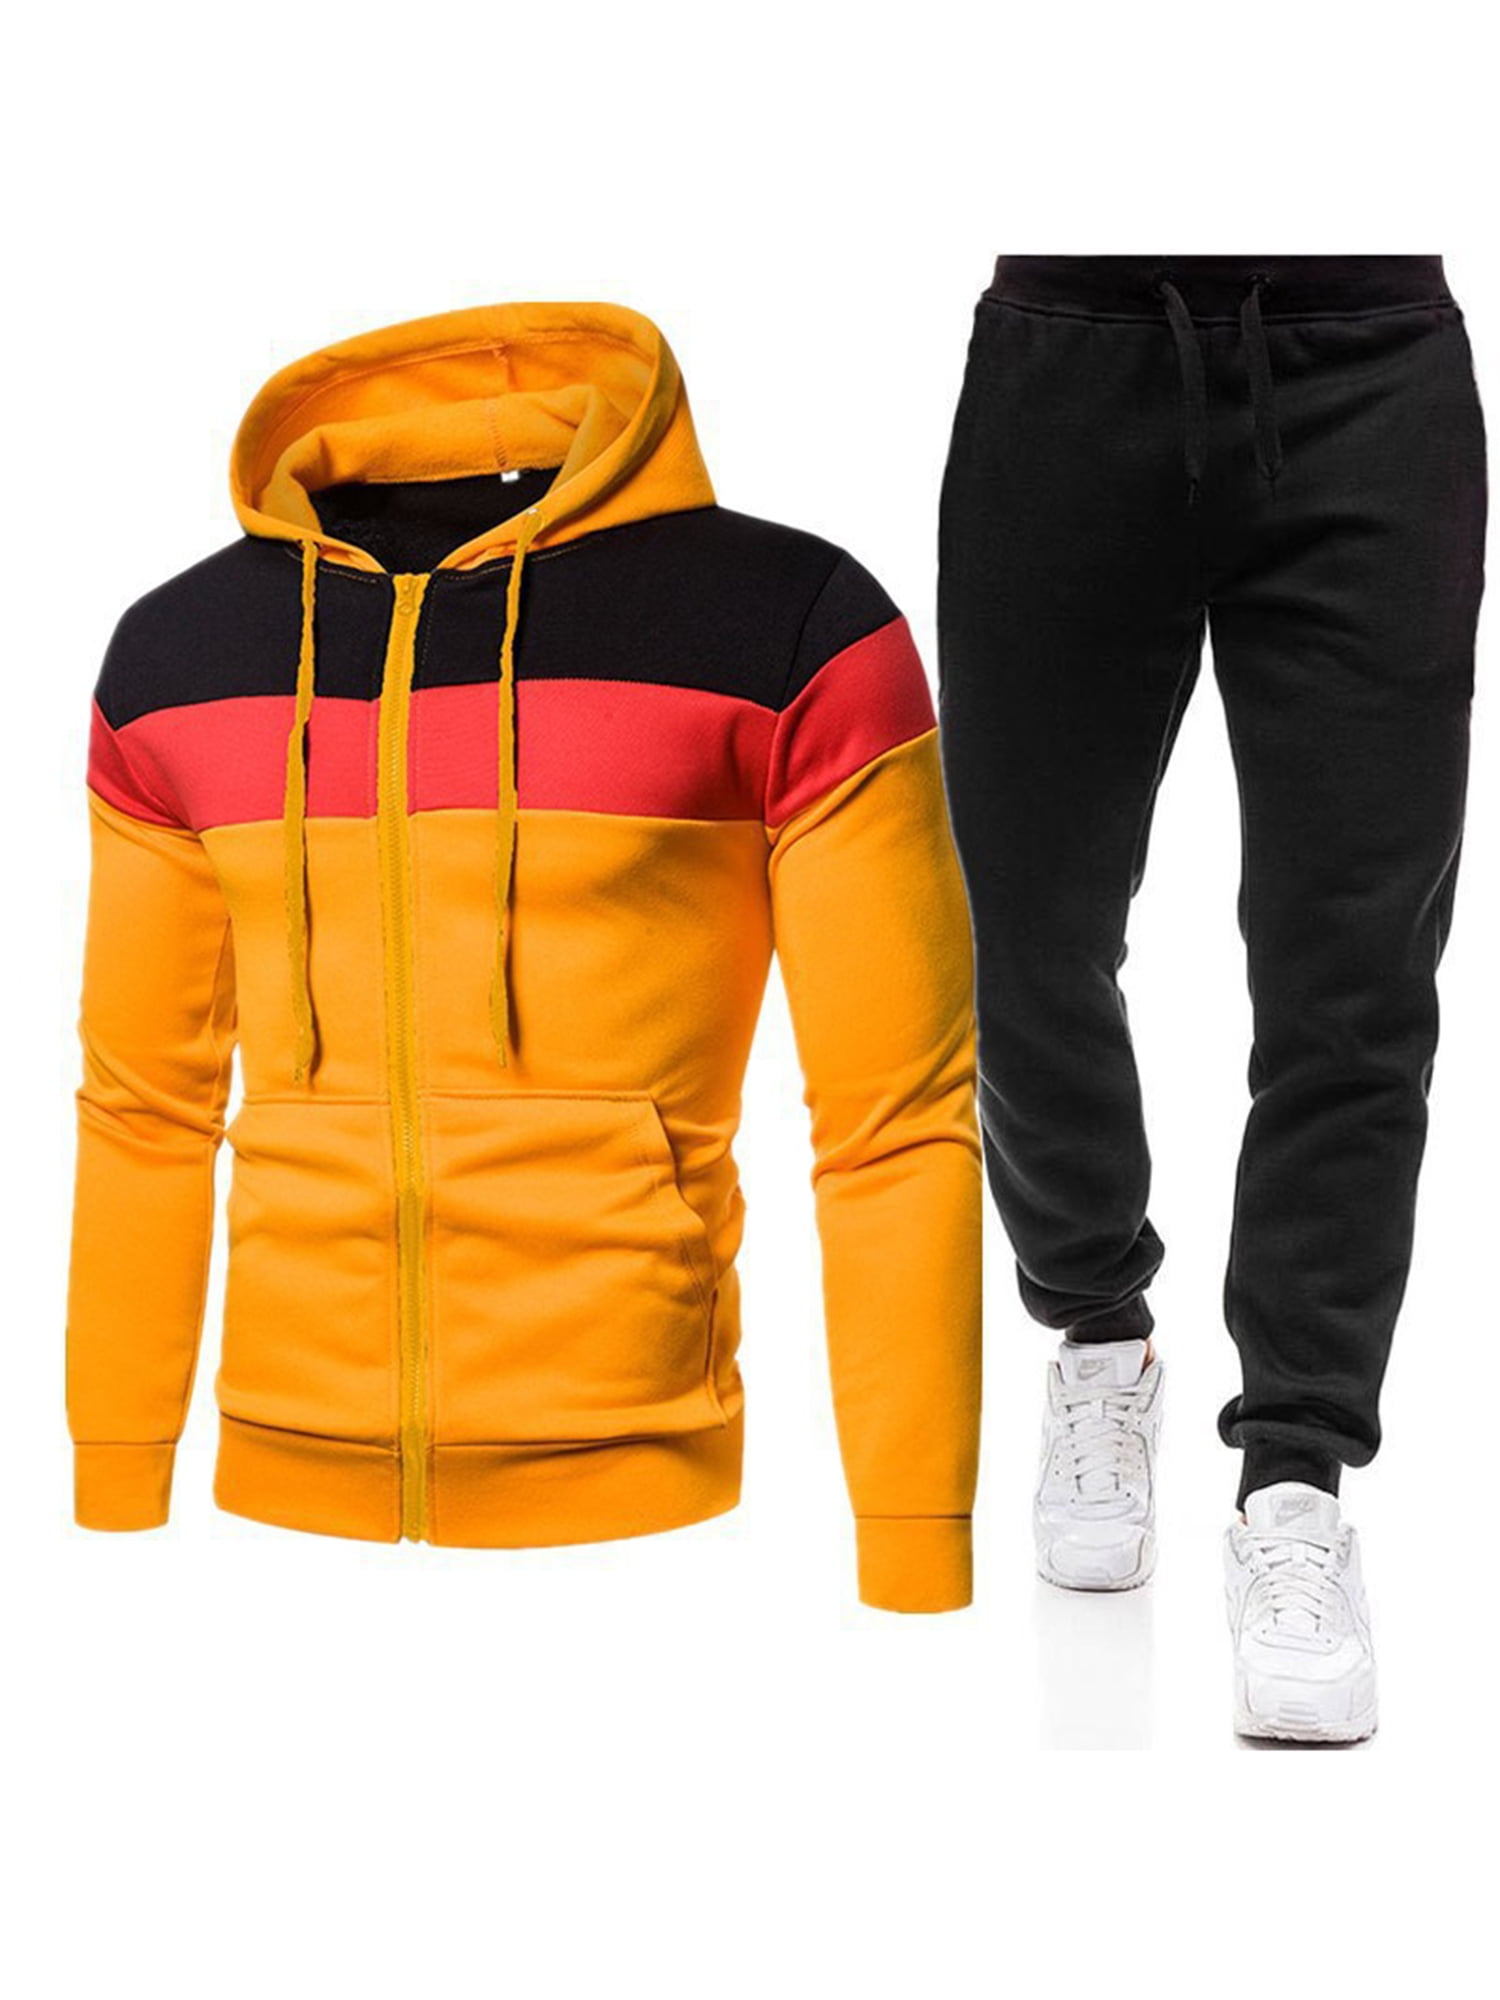 BUYJYA Men's Velour Tracksuit Set Velvet Sweatsuit Jogging Suits Full Zip  Casual Jackets Pants 2 piece Warm Outfit Athletic Workout